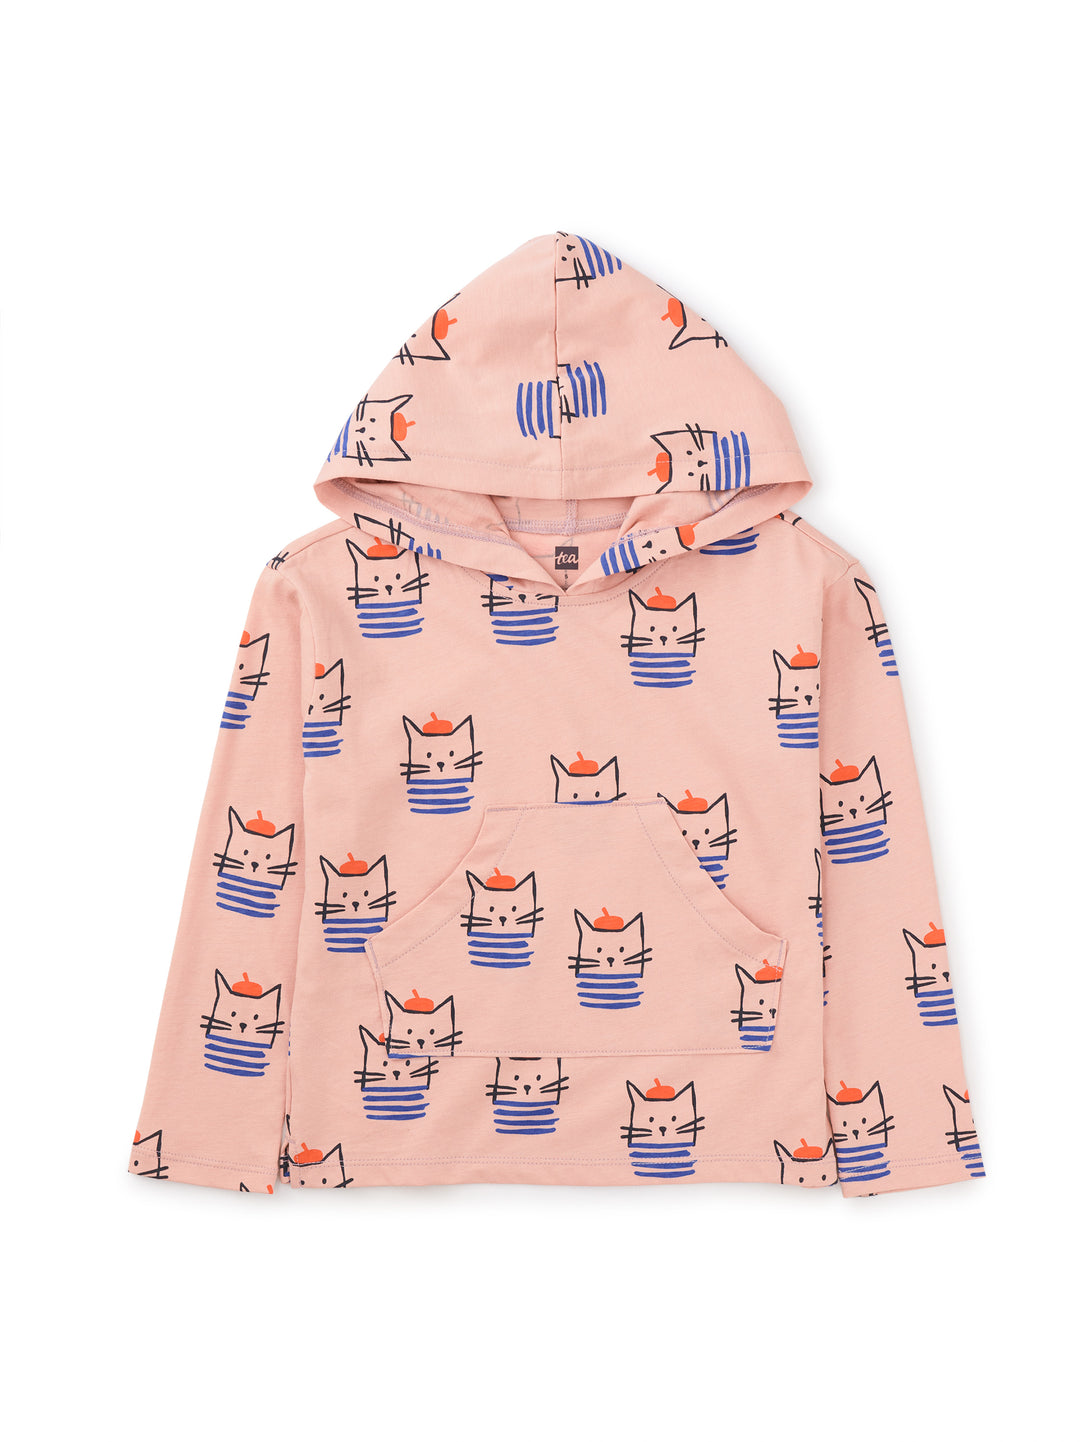 Tea Collection Hooded Top with Kanga Pocket, Chat et Chapeau |Mockingbird Baby & Kids